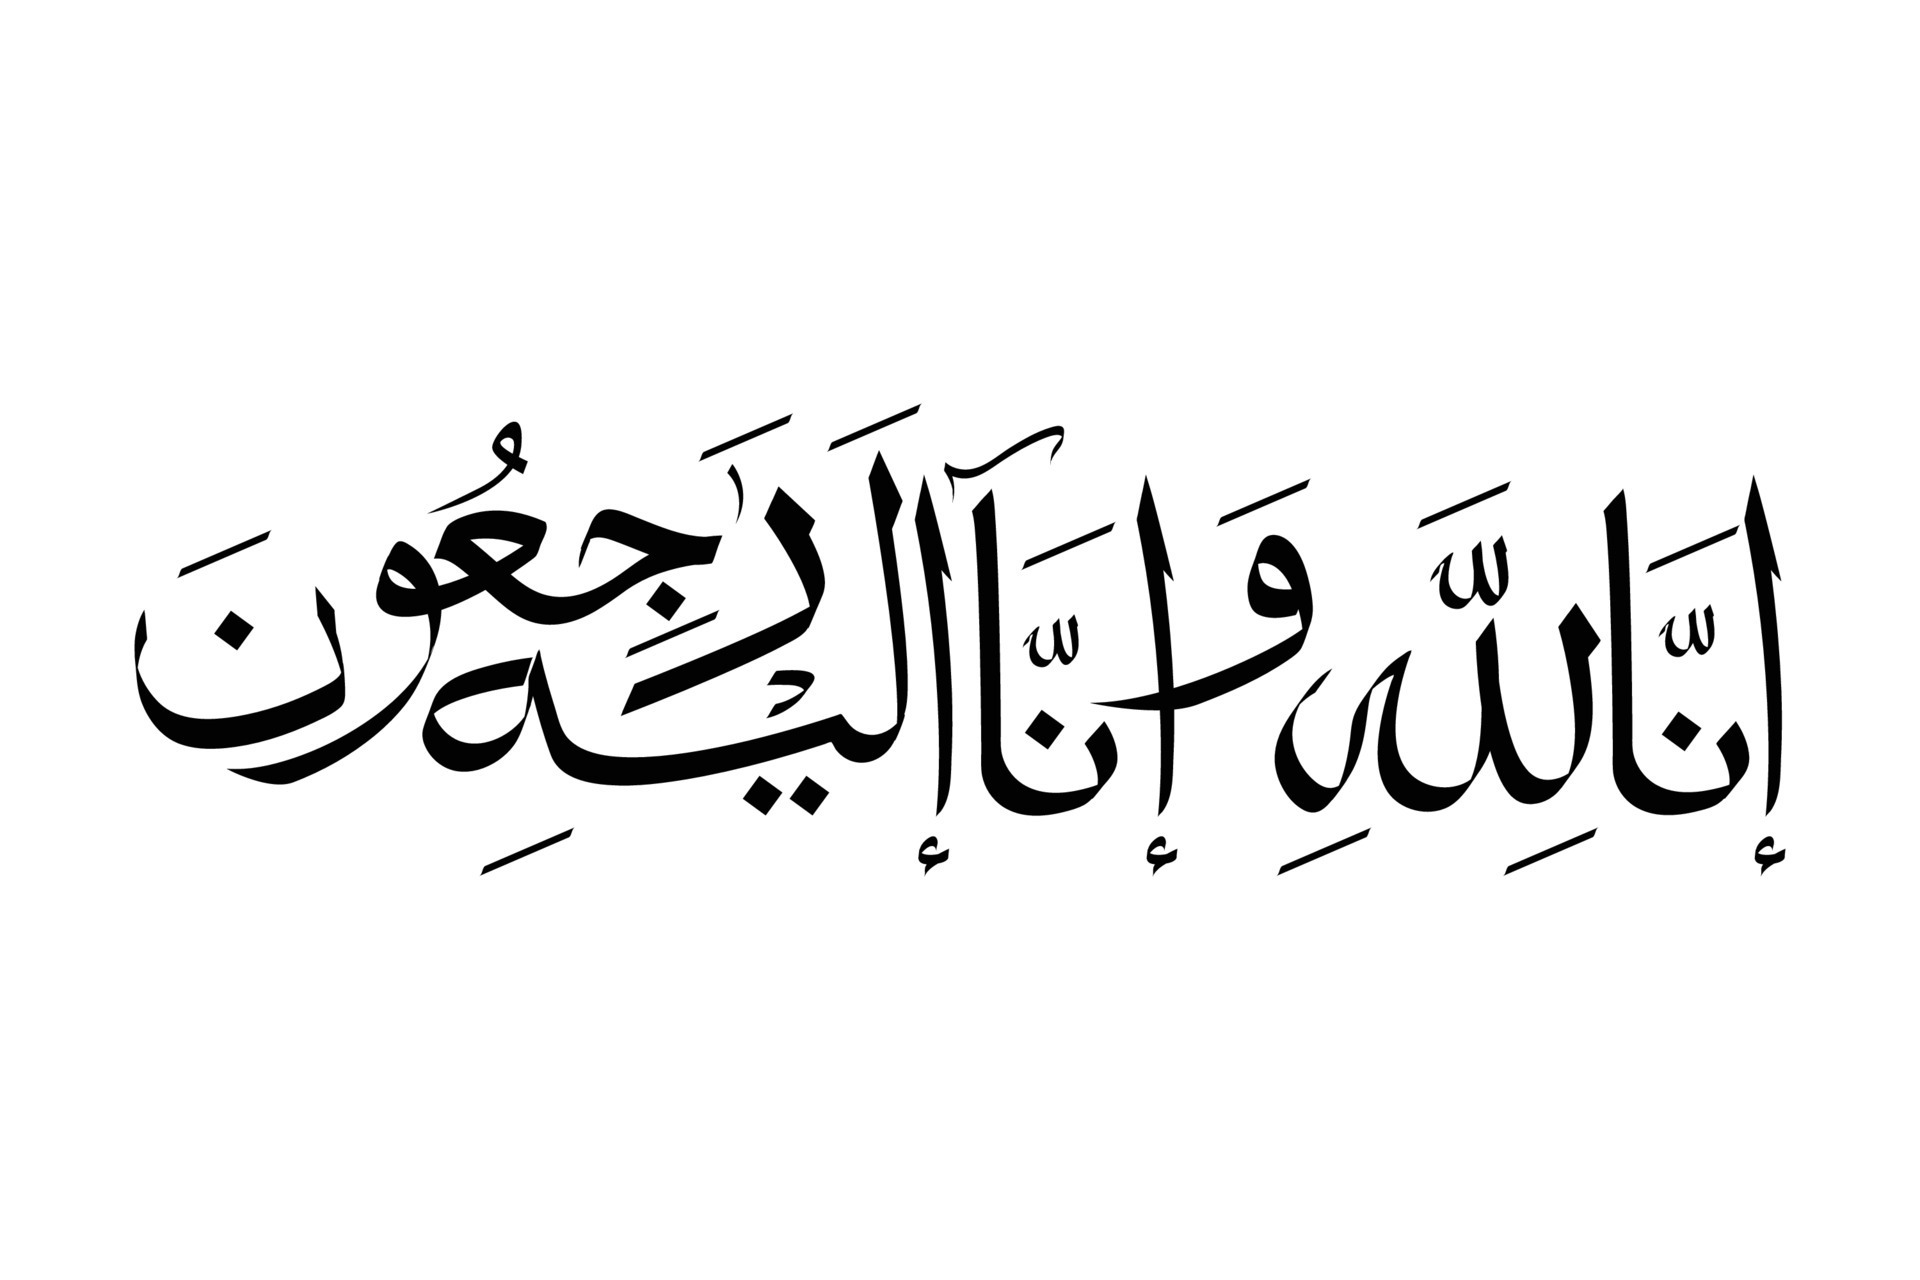 arabic-calligraphy-artwork-of-inna-lillahi-wa-inna-ilaihi-raji-un-translations-we-surely-belong-to-allah-and-to-him-we-shall-return-free-vector.jpg